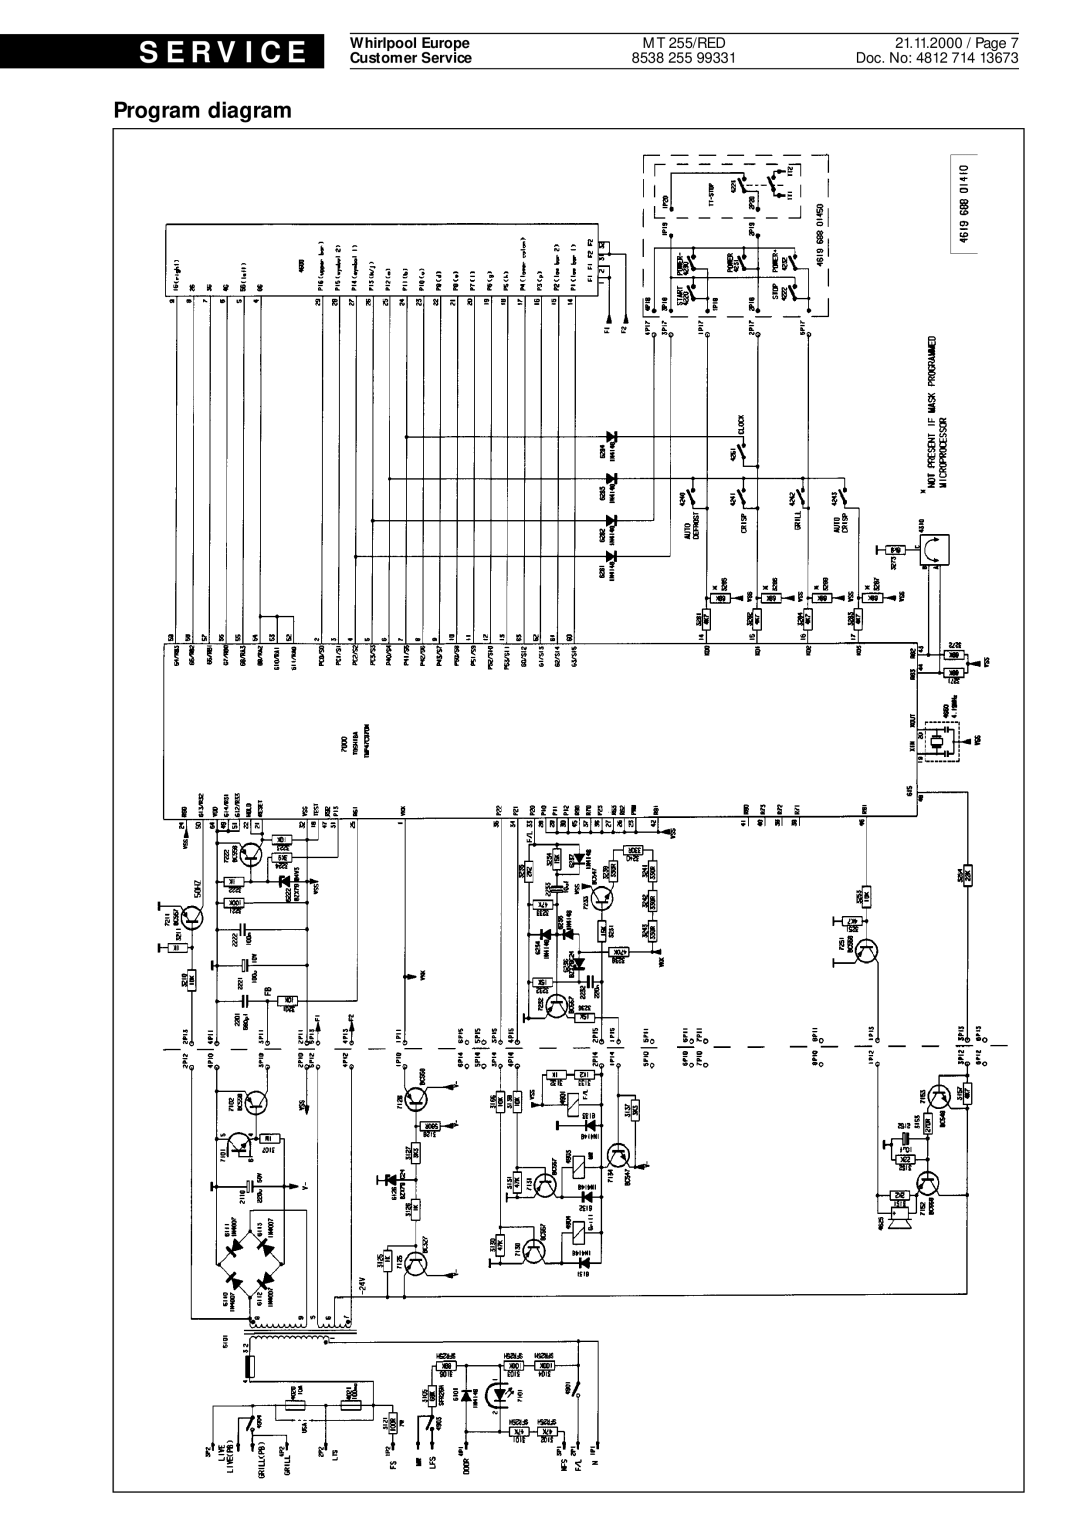 Whirlpool service manual Program diagram, S E R V I C E, MT 255/RED, 21.11.2000 / Page, 8538, Doc. No 